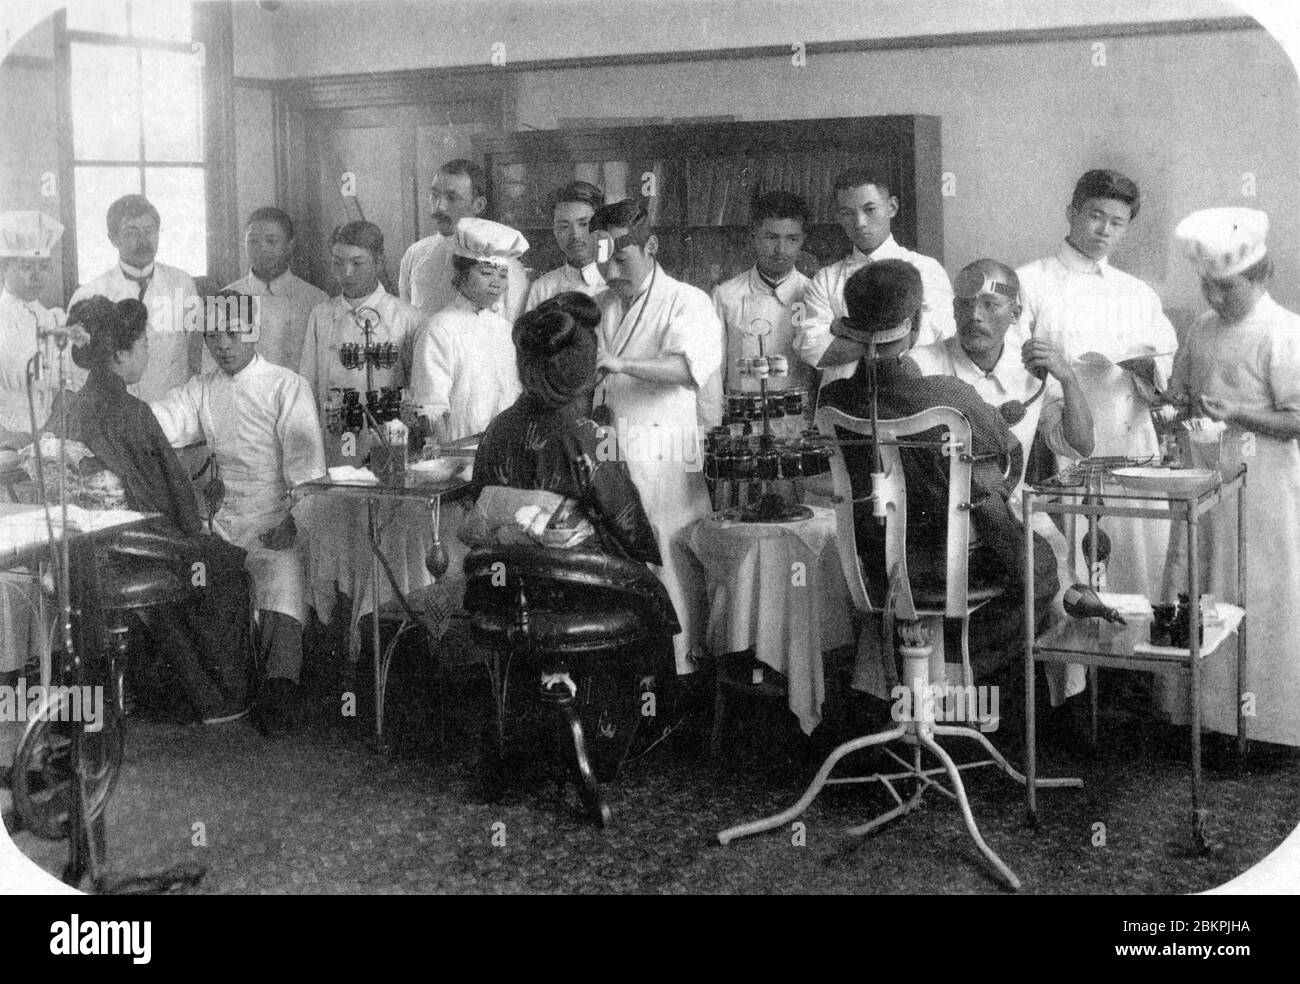 [ 1910s Japan - Japanese Doctors and Patients ] —   Doctors-to-be and nurses attend to patients at Okayama Iigakku Senmon Gakko, a medical school in Okayama, in 1910 (Meiji 34).  20th century vintage gelatin silver print. Stock Photo